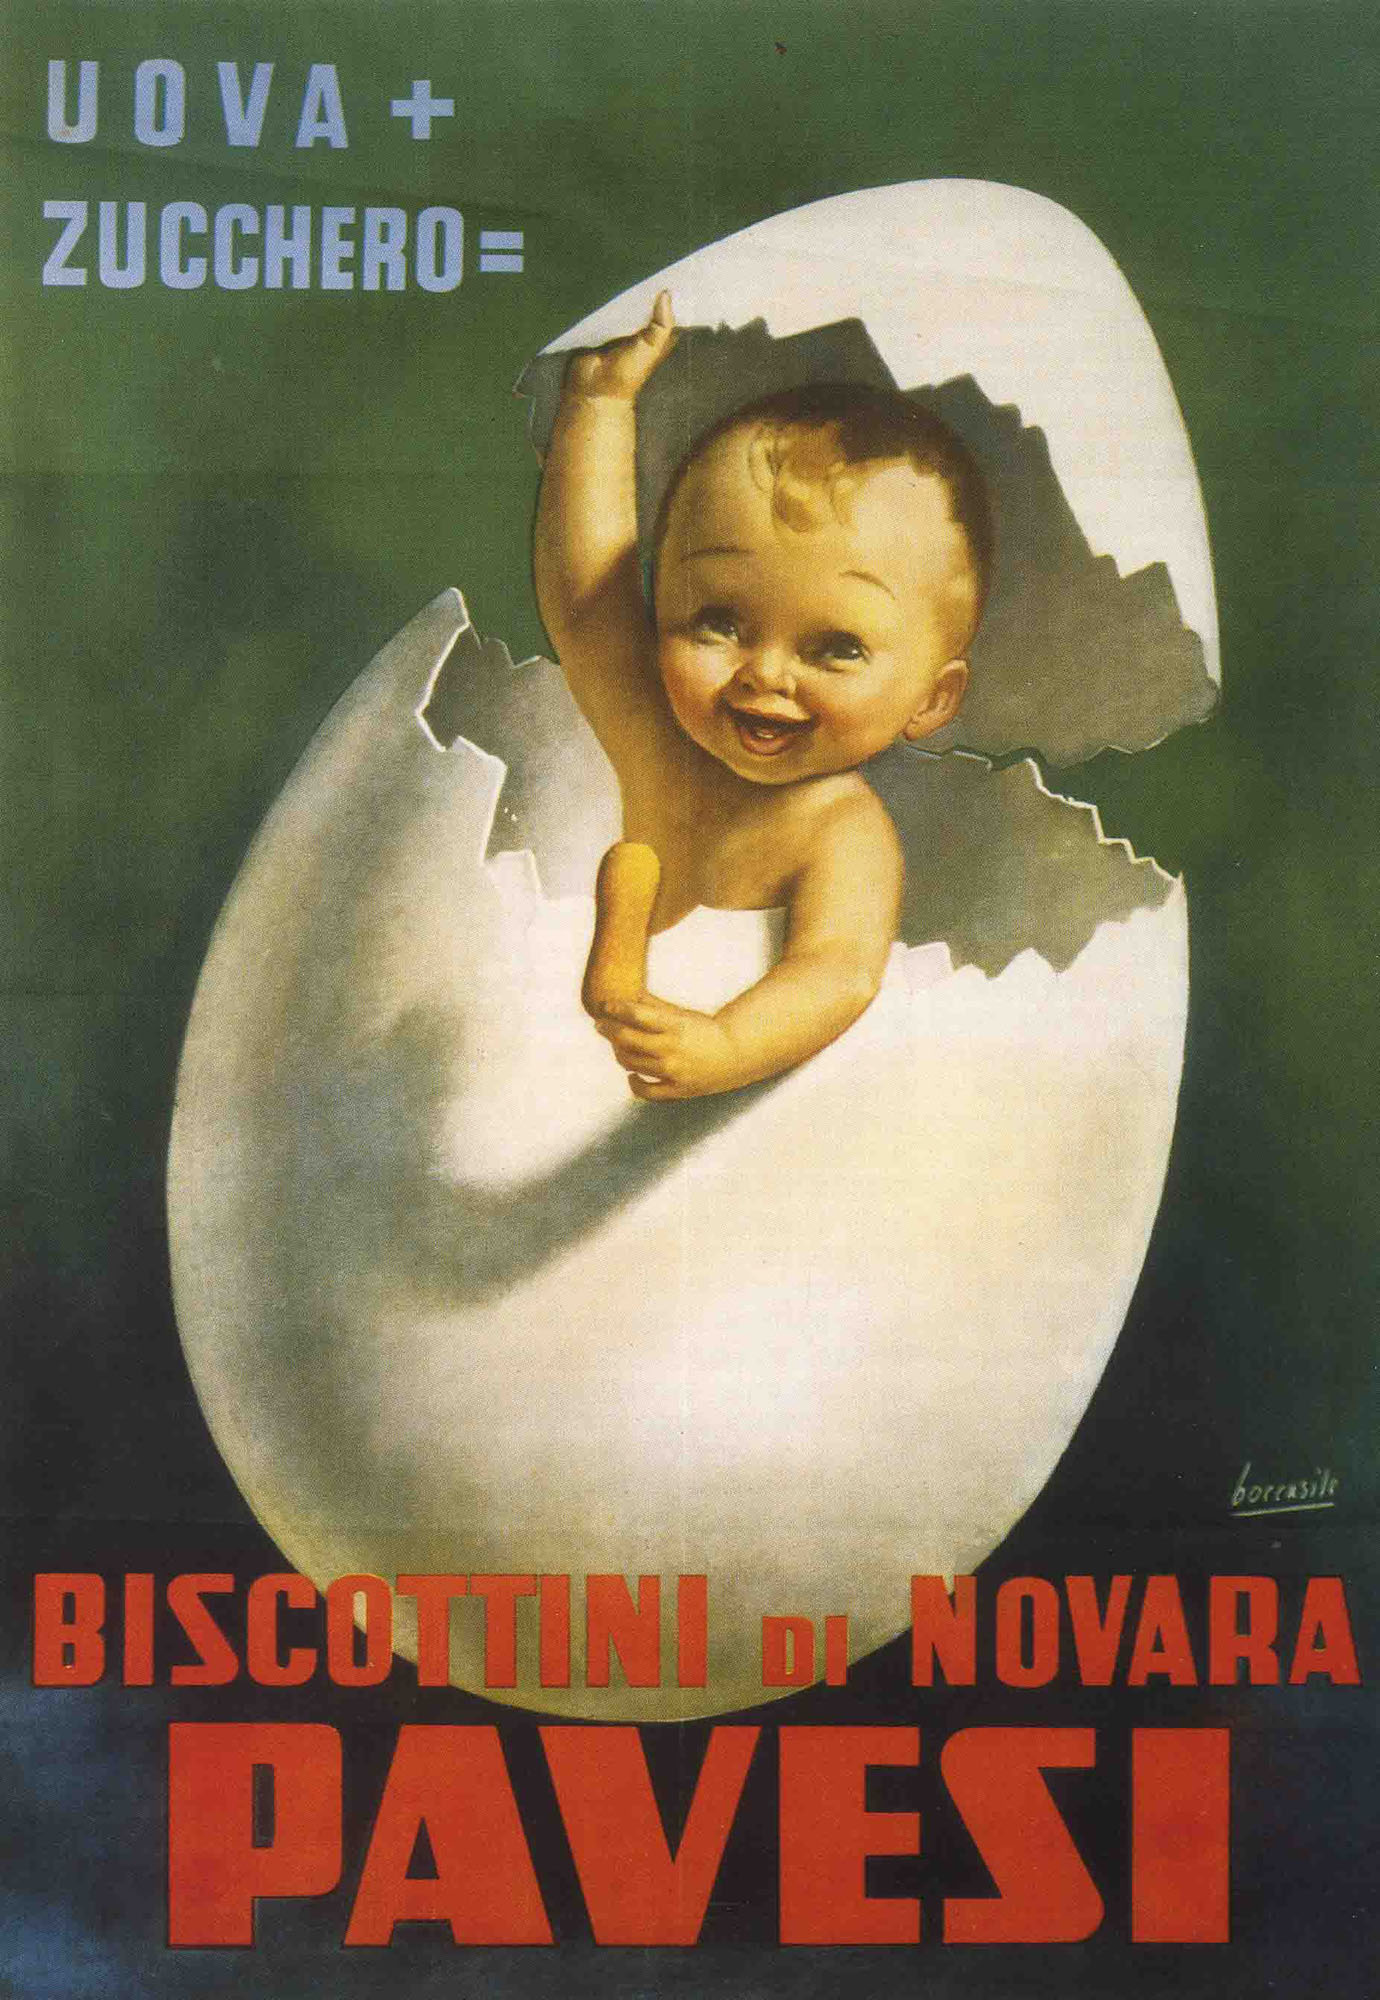 Affissioni Pavesini - Gino Boccasile, Biscottini di Novara Pavesi 1948